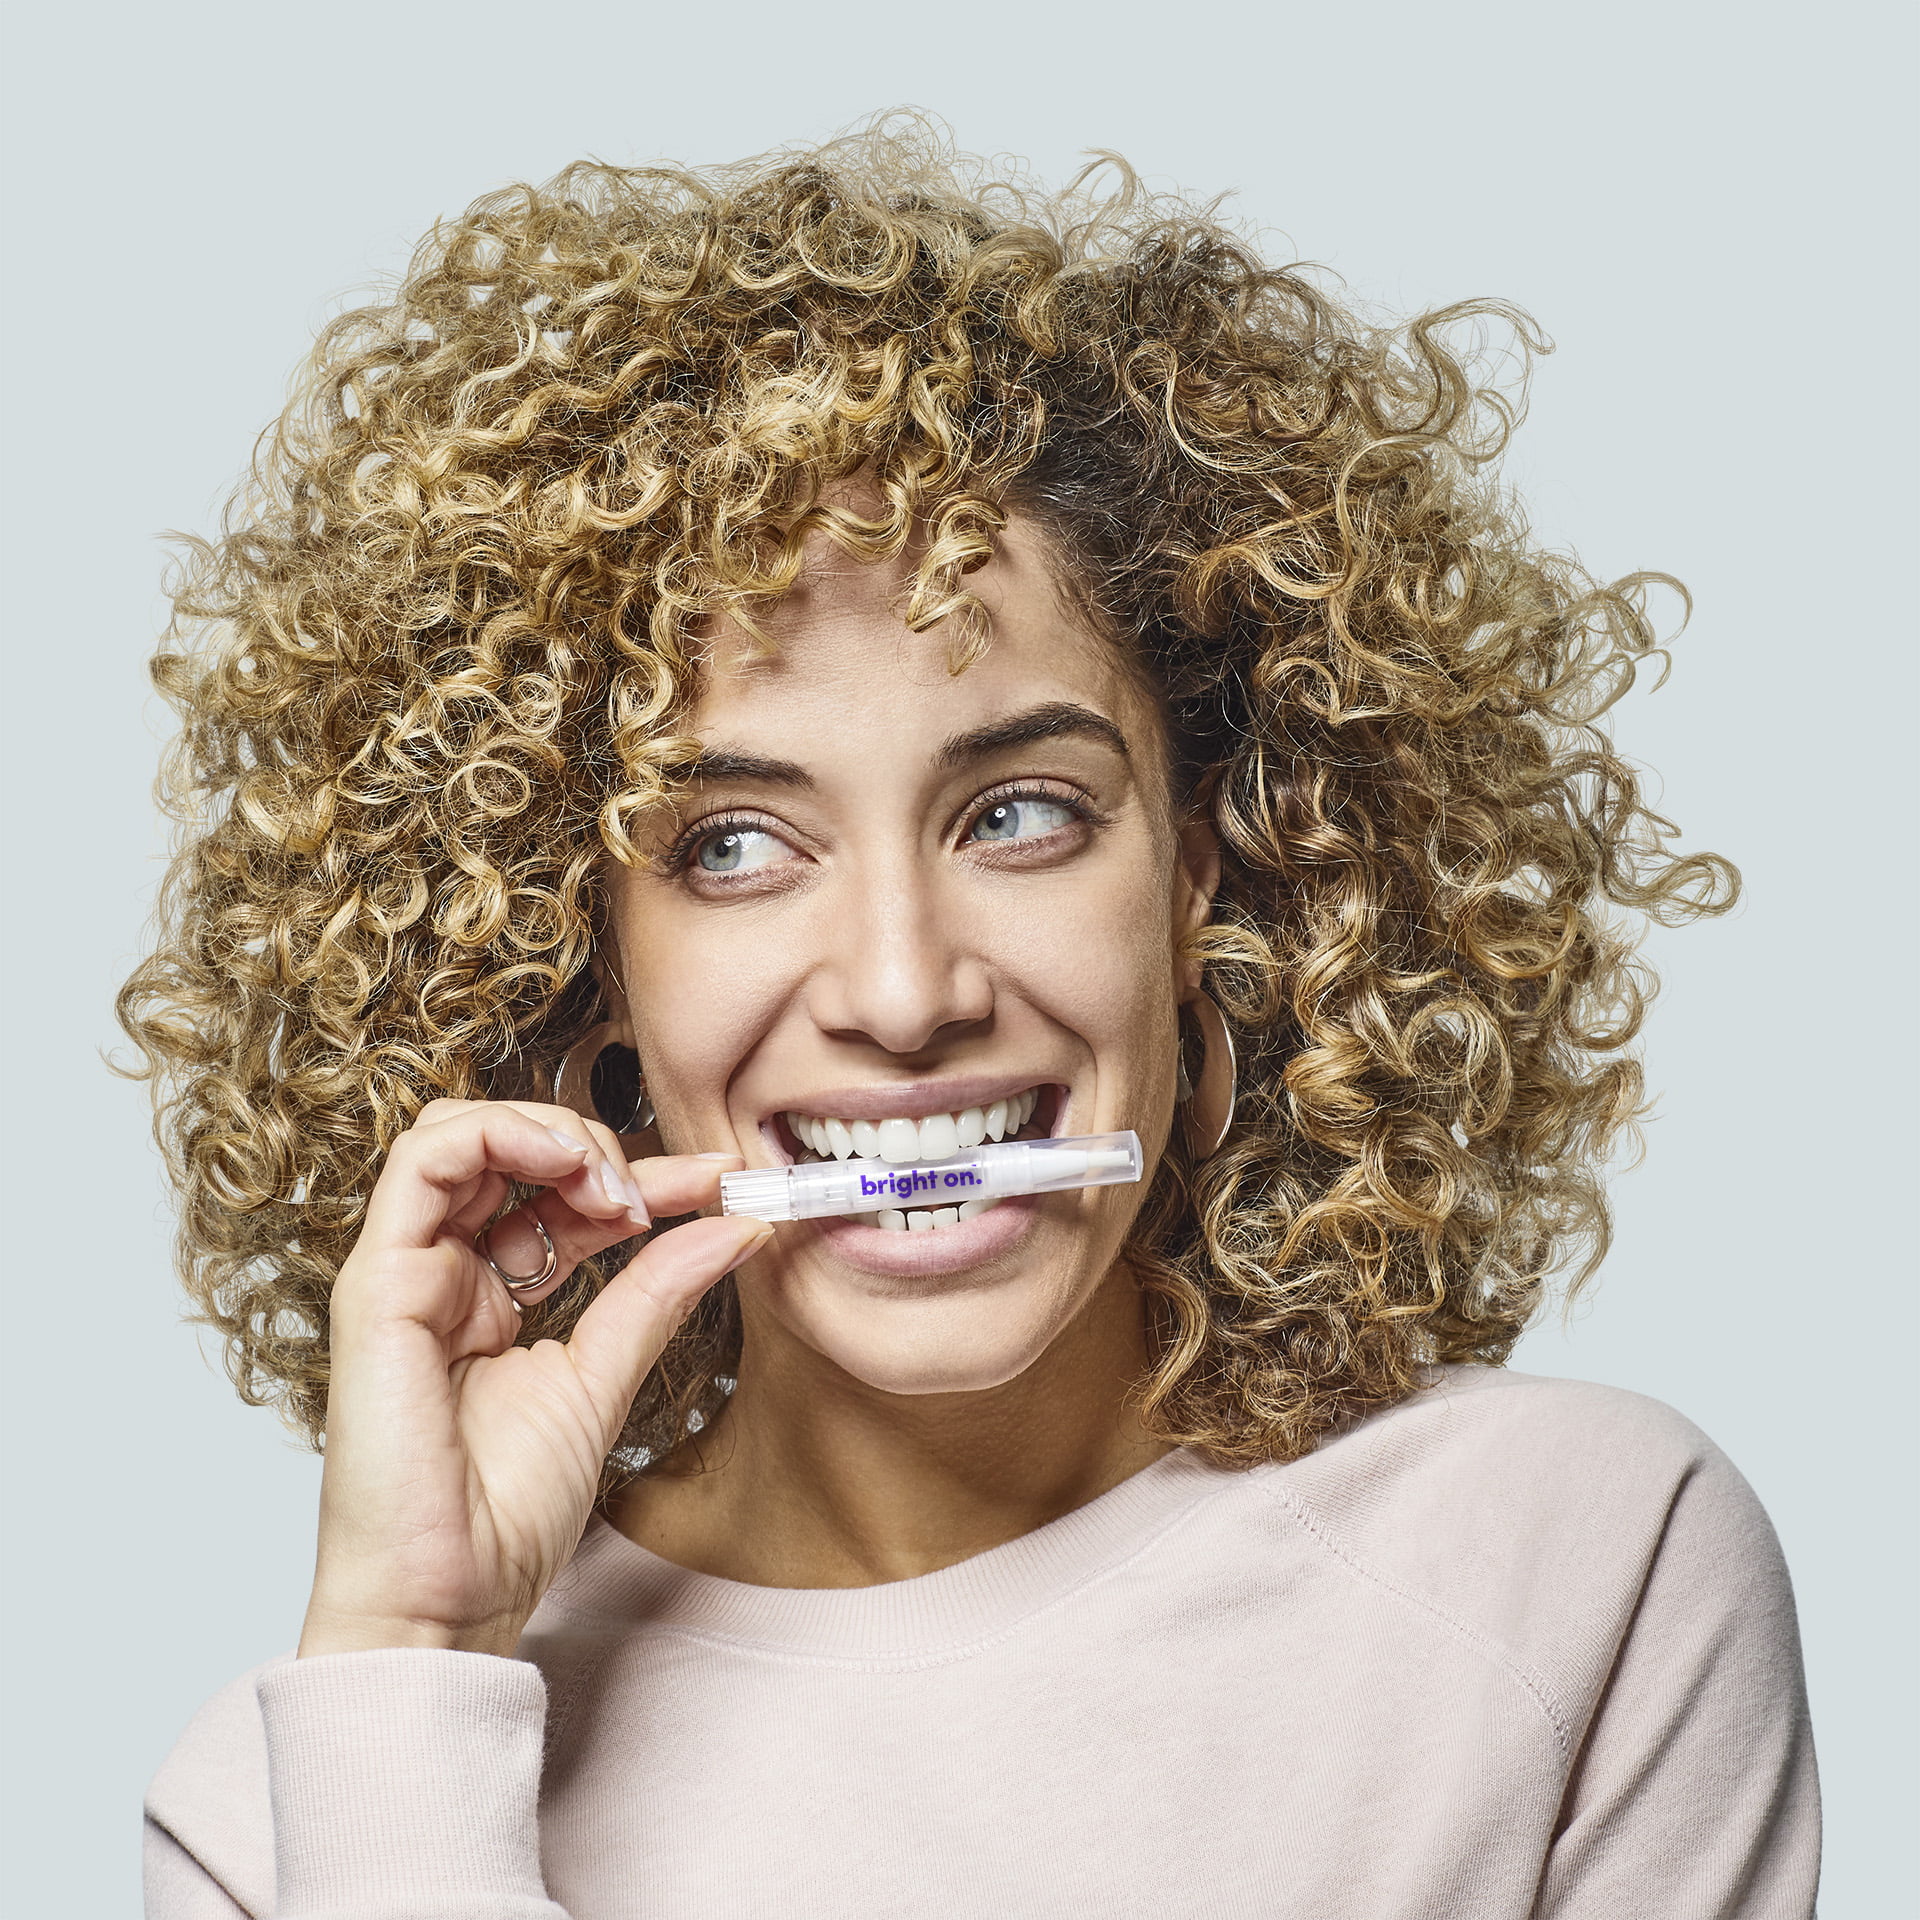 Smile Direct Club Bright On Premium Teeth Whitening Pens 8 Whitening Pens Safe Dental And Oral Care Walmart Com Walmart Com